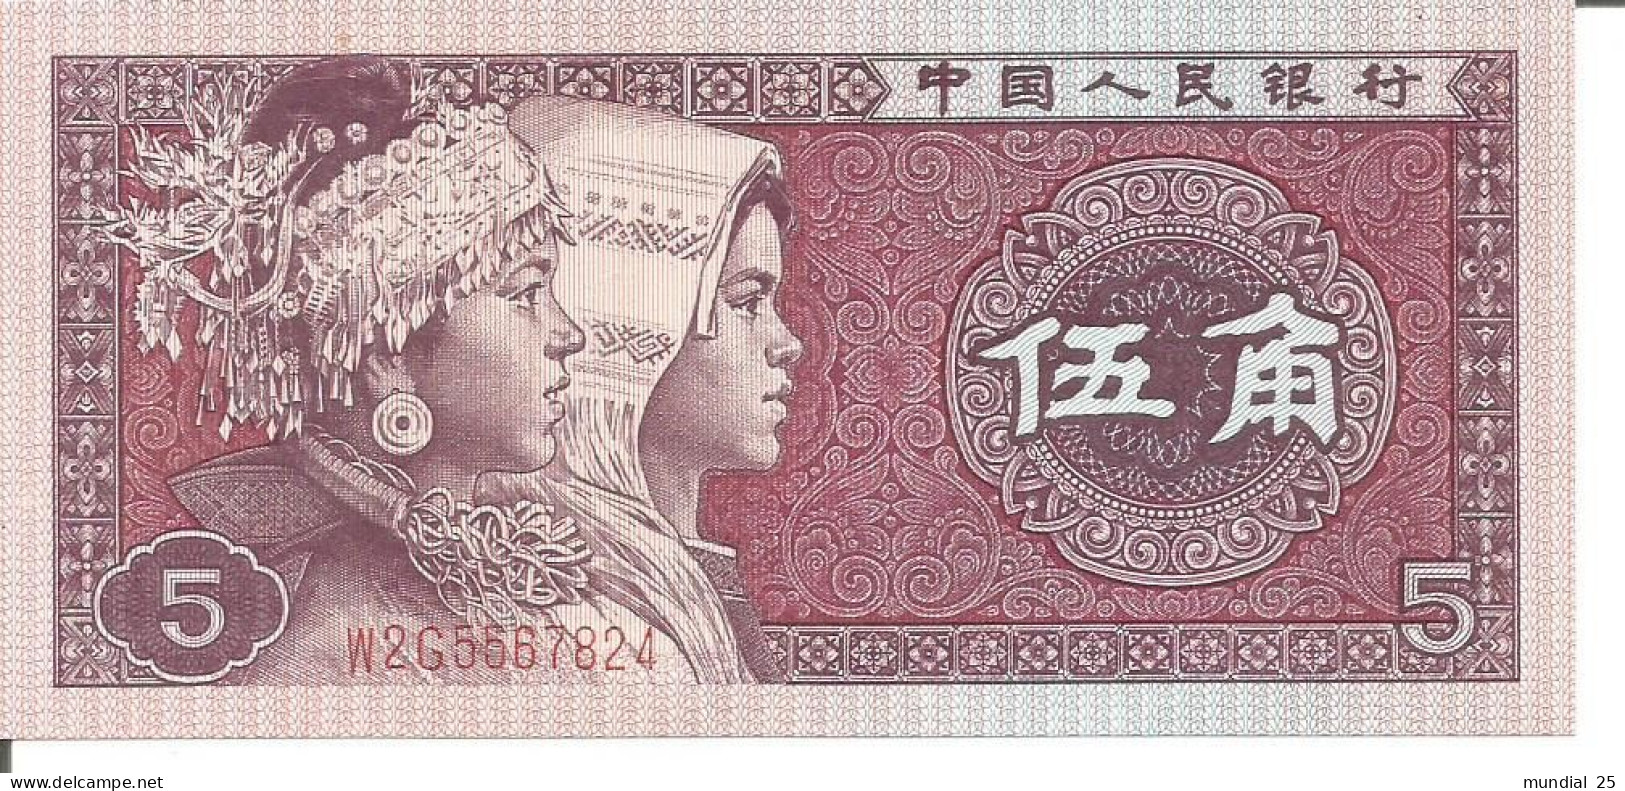 3 CHINA NOTES 5 JIAO 1980 - China